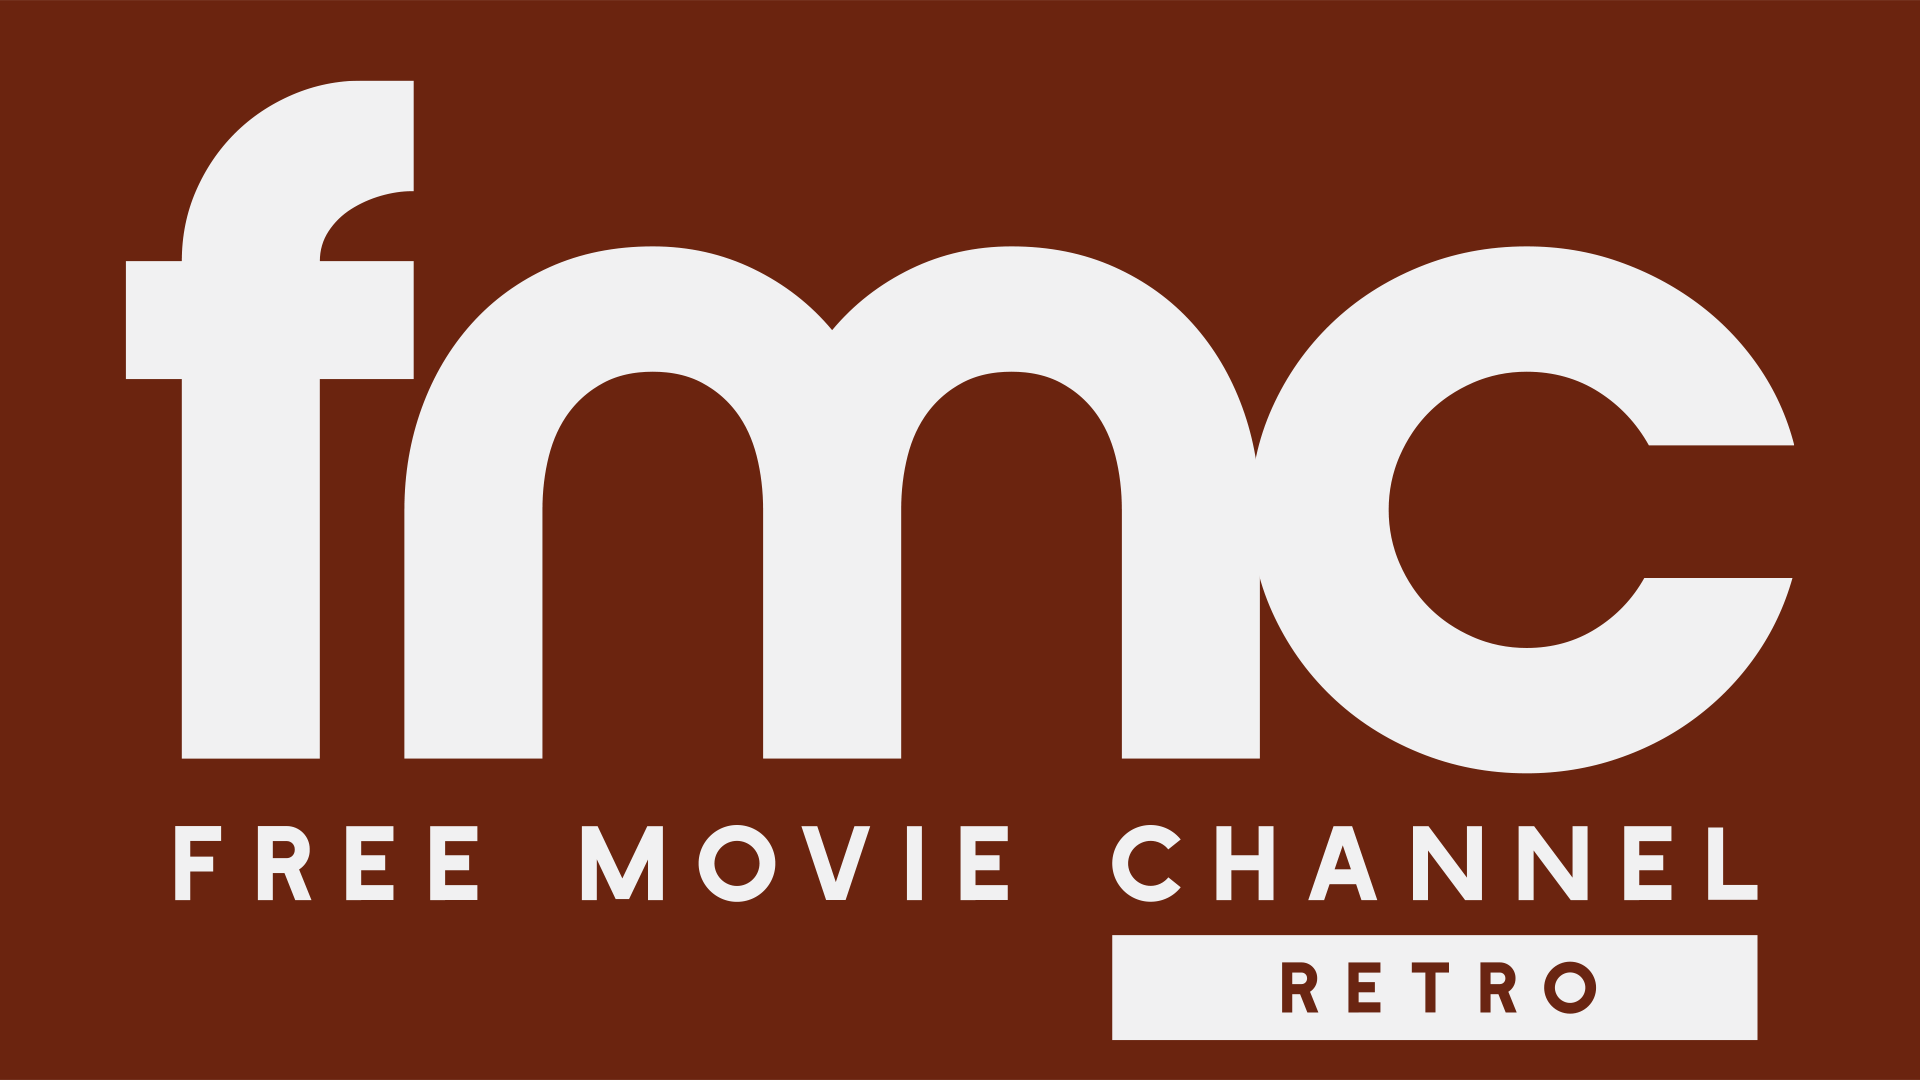 Free Movie Channel Retro logo